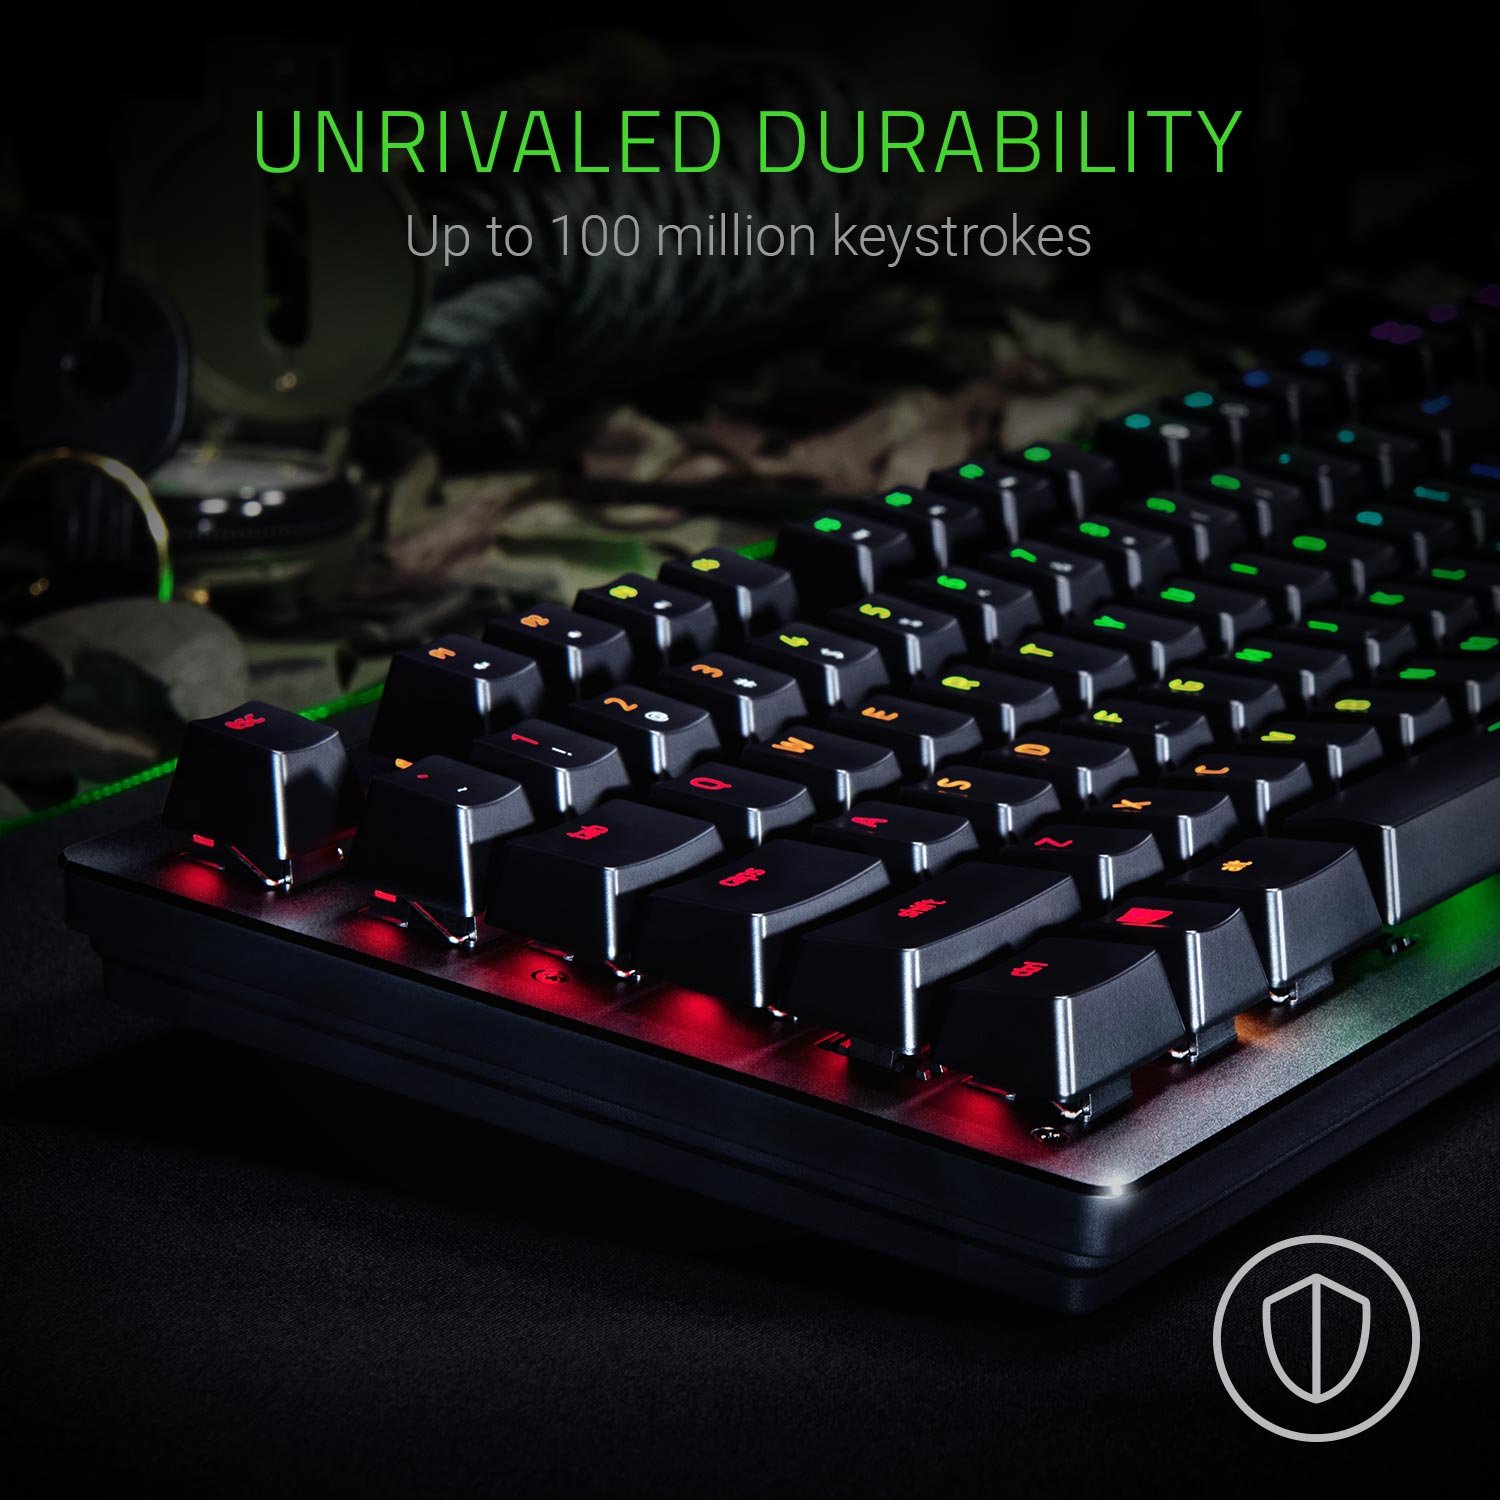 Razer Huntsman Gaming Keyboard: Fast Keyboard Switches - Clicky Optical Switches - Customizable Chroma RGB Lighting - Programmable Macro Functionality - Classic Black